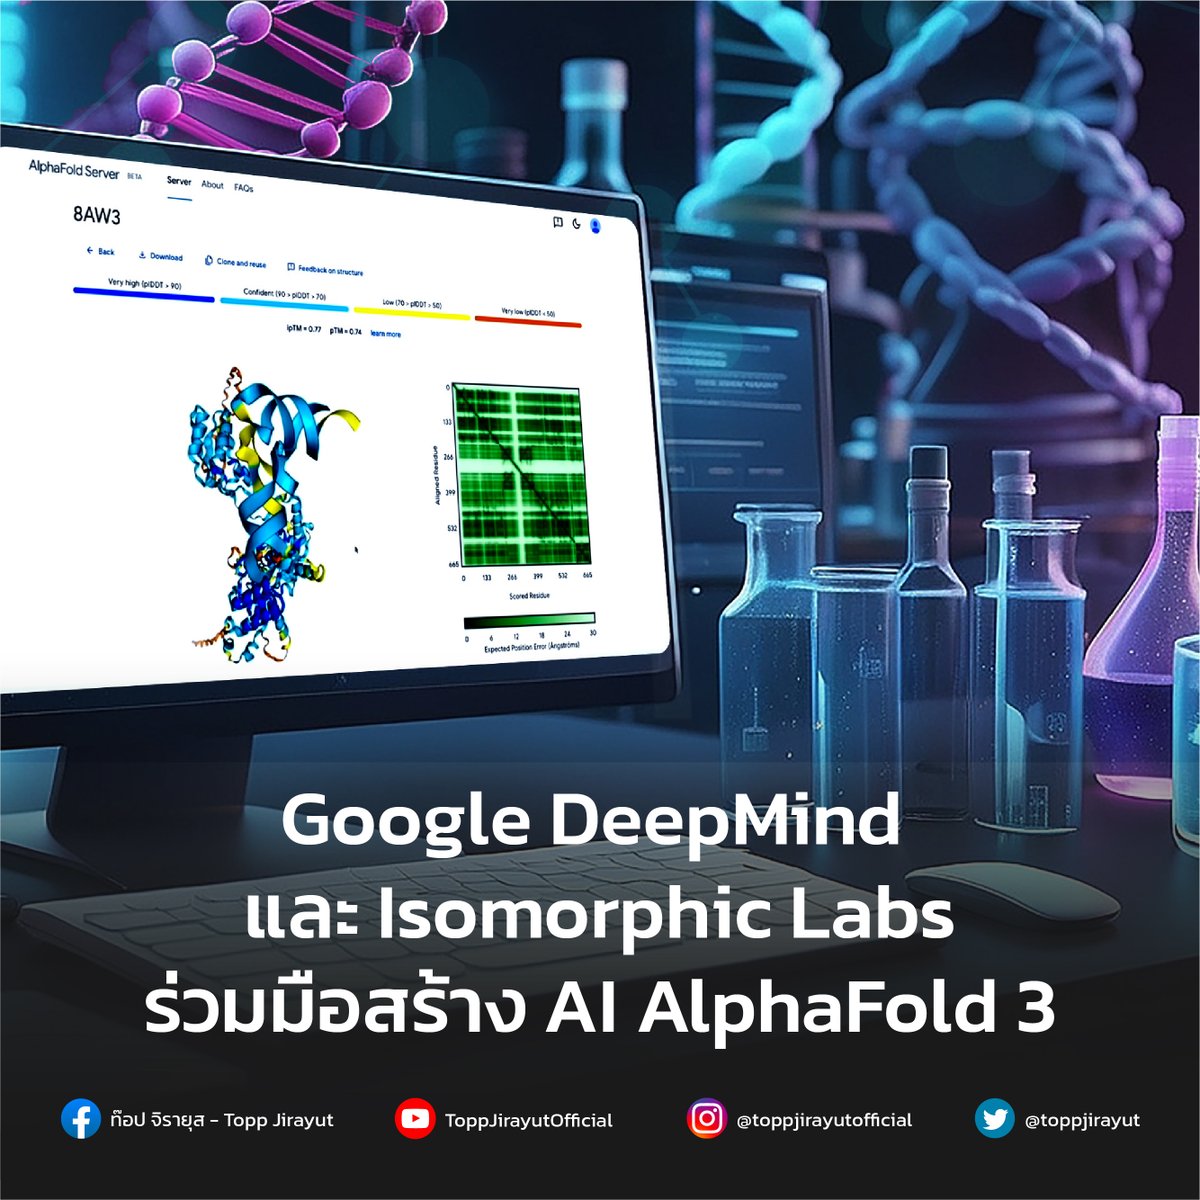 Google DeepMind และ Isomorphic Labs ร่วมมือสร้าง AI AlphaFold 3 โมเดล AI ใหม่ที่สามารถทำนายโครงสร้างและปฏิกิริยาของโมเลกุลได้อย่างแม่นยำ และยังเป็น AI แรกที่เหนือกว่าเครื่องมือทางฟิสิกส์สำหรับการทำนายโครงสร้างชีวโมเลกุล

bit.ly/3US9MXB 

#Toppjirayut #ท๊อปจิรายุส